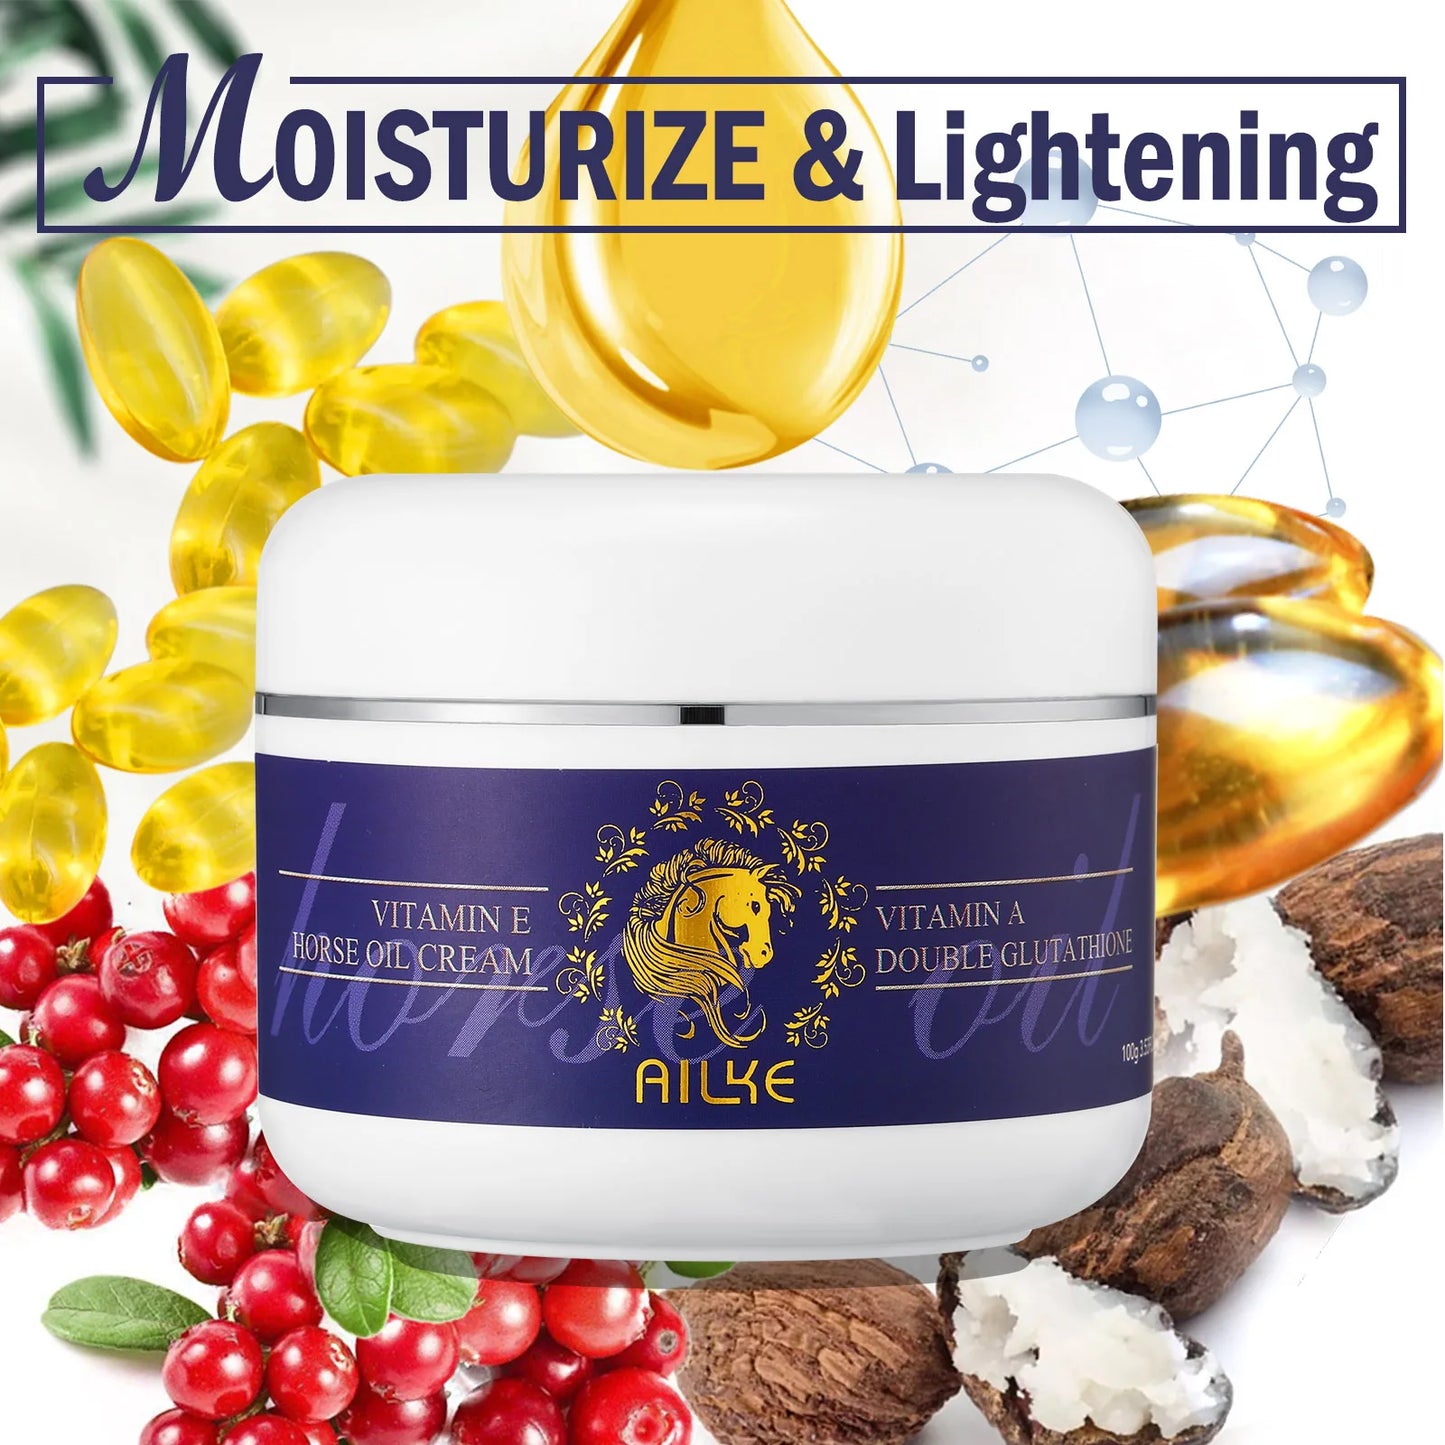 AILKE Glutathione 5-in-1 Women Skin Care Kit, With Body Lotion,  Serum, Dark Spot Removal Cream, Body Cream, Brightening Soap